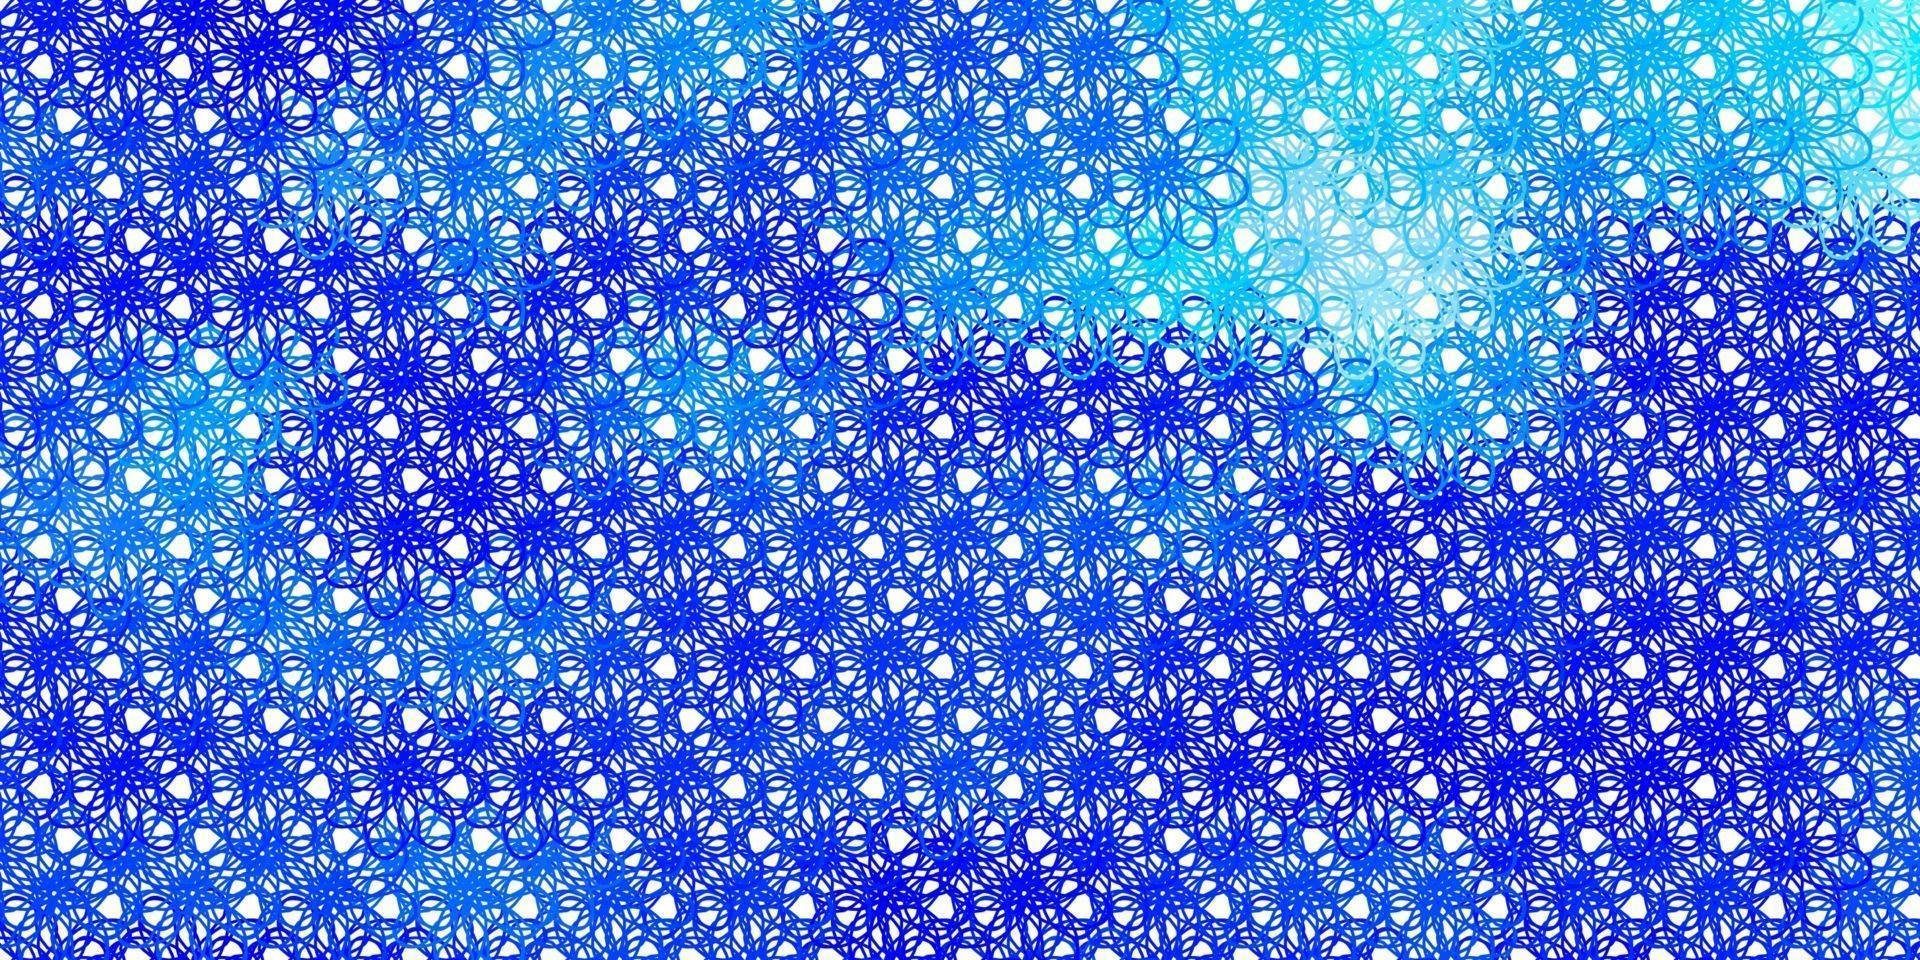 ljusblå vektor bakgrund med linjer.